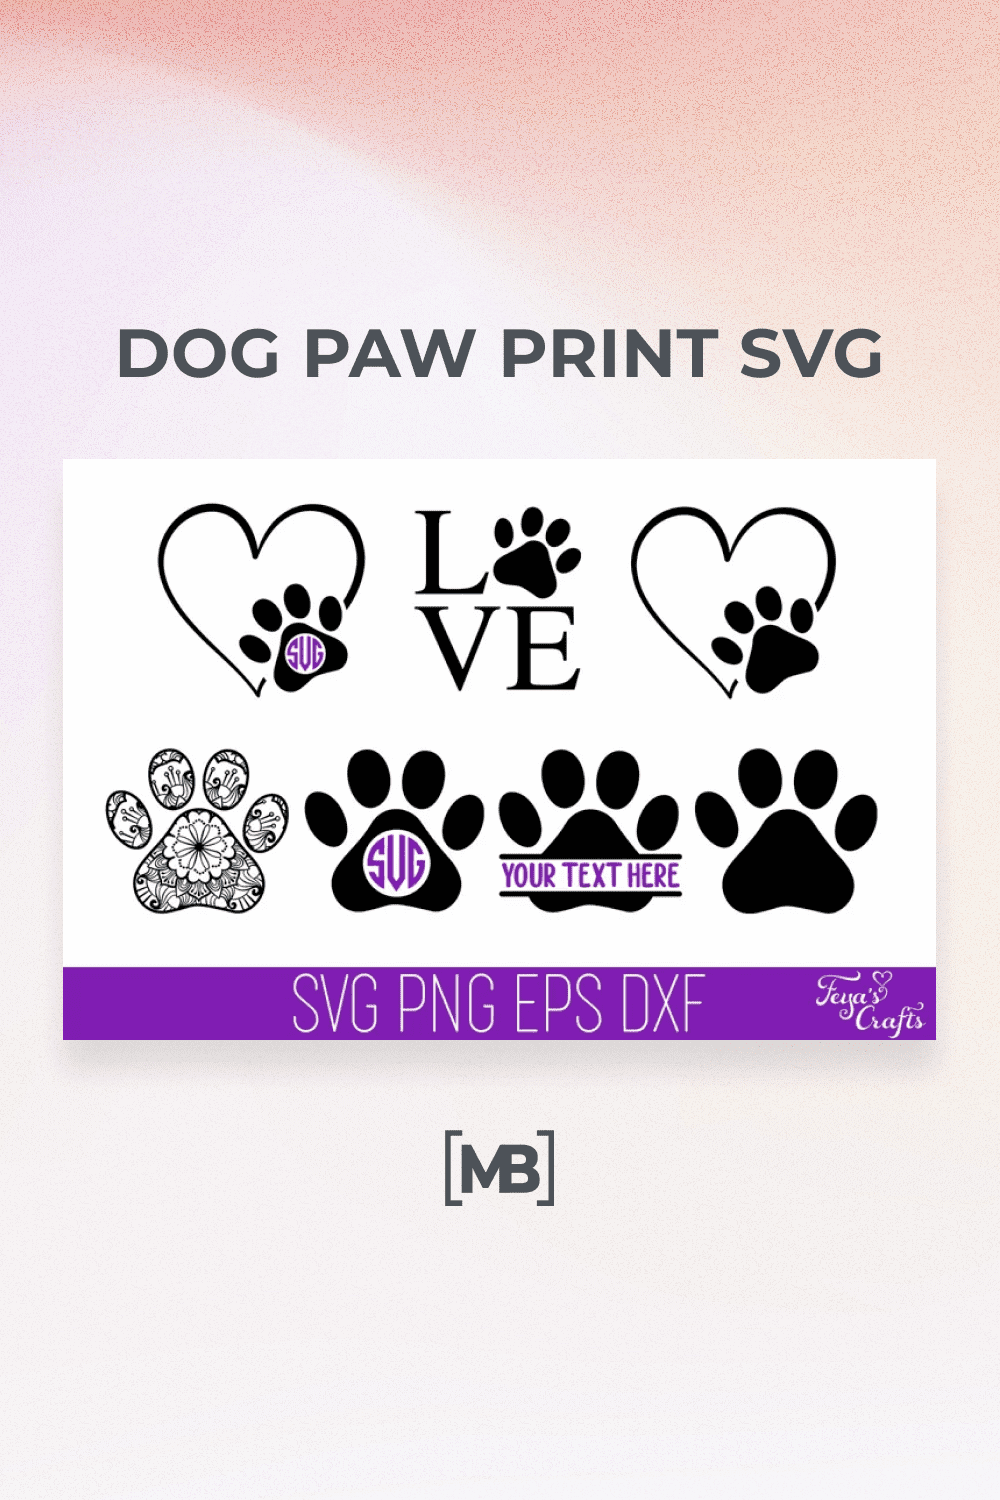 Dog Paw Print SVG.